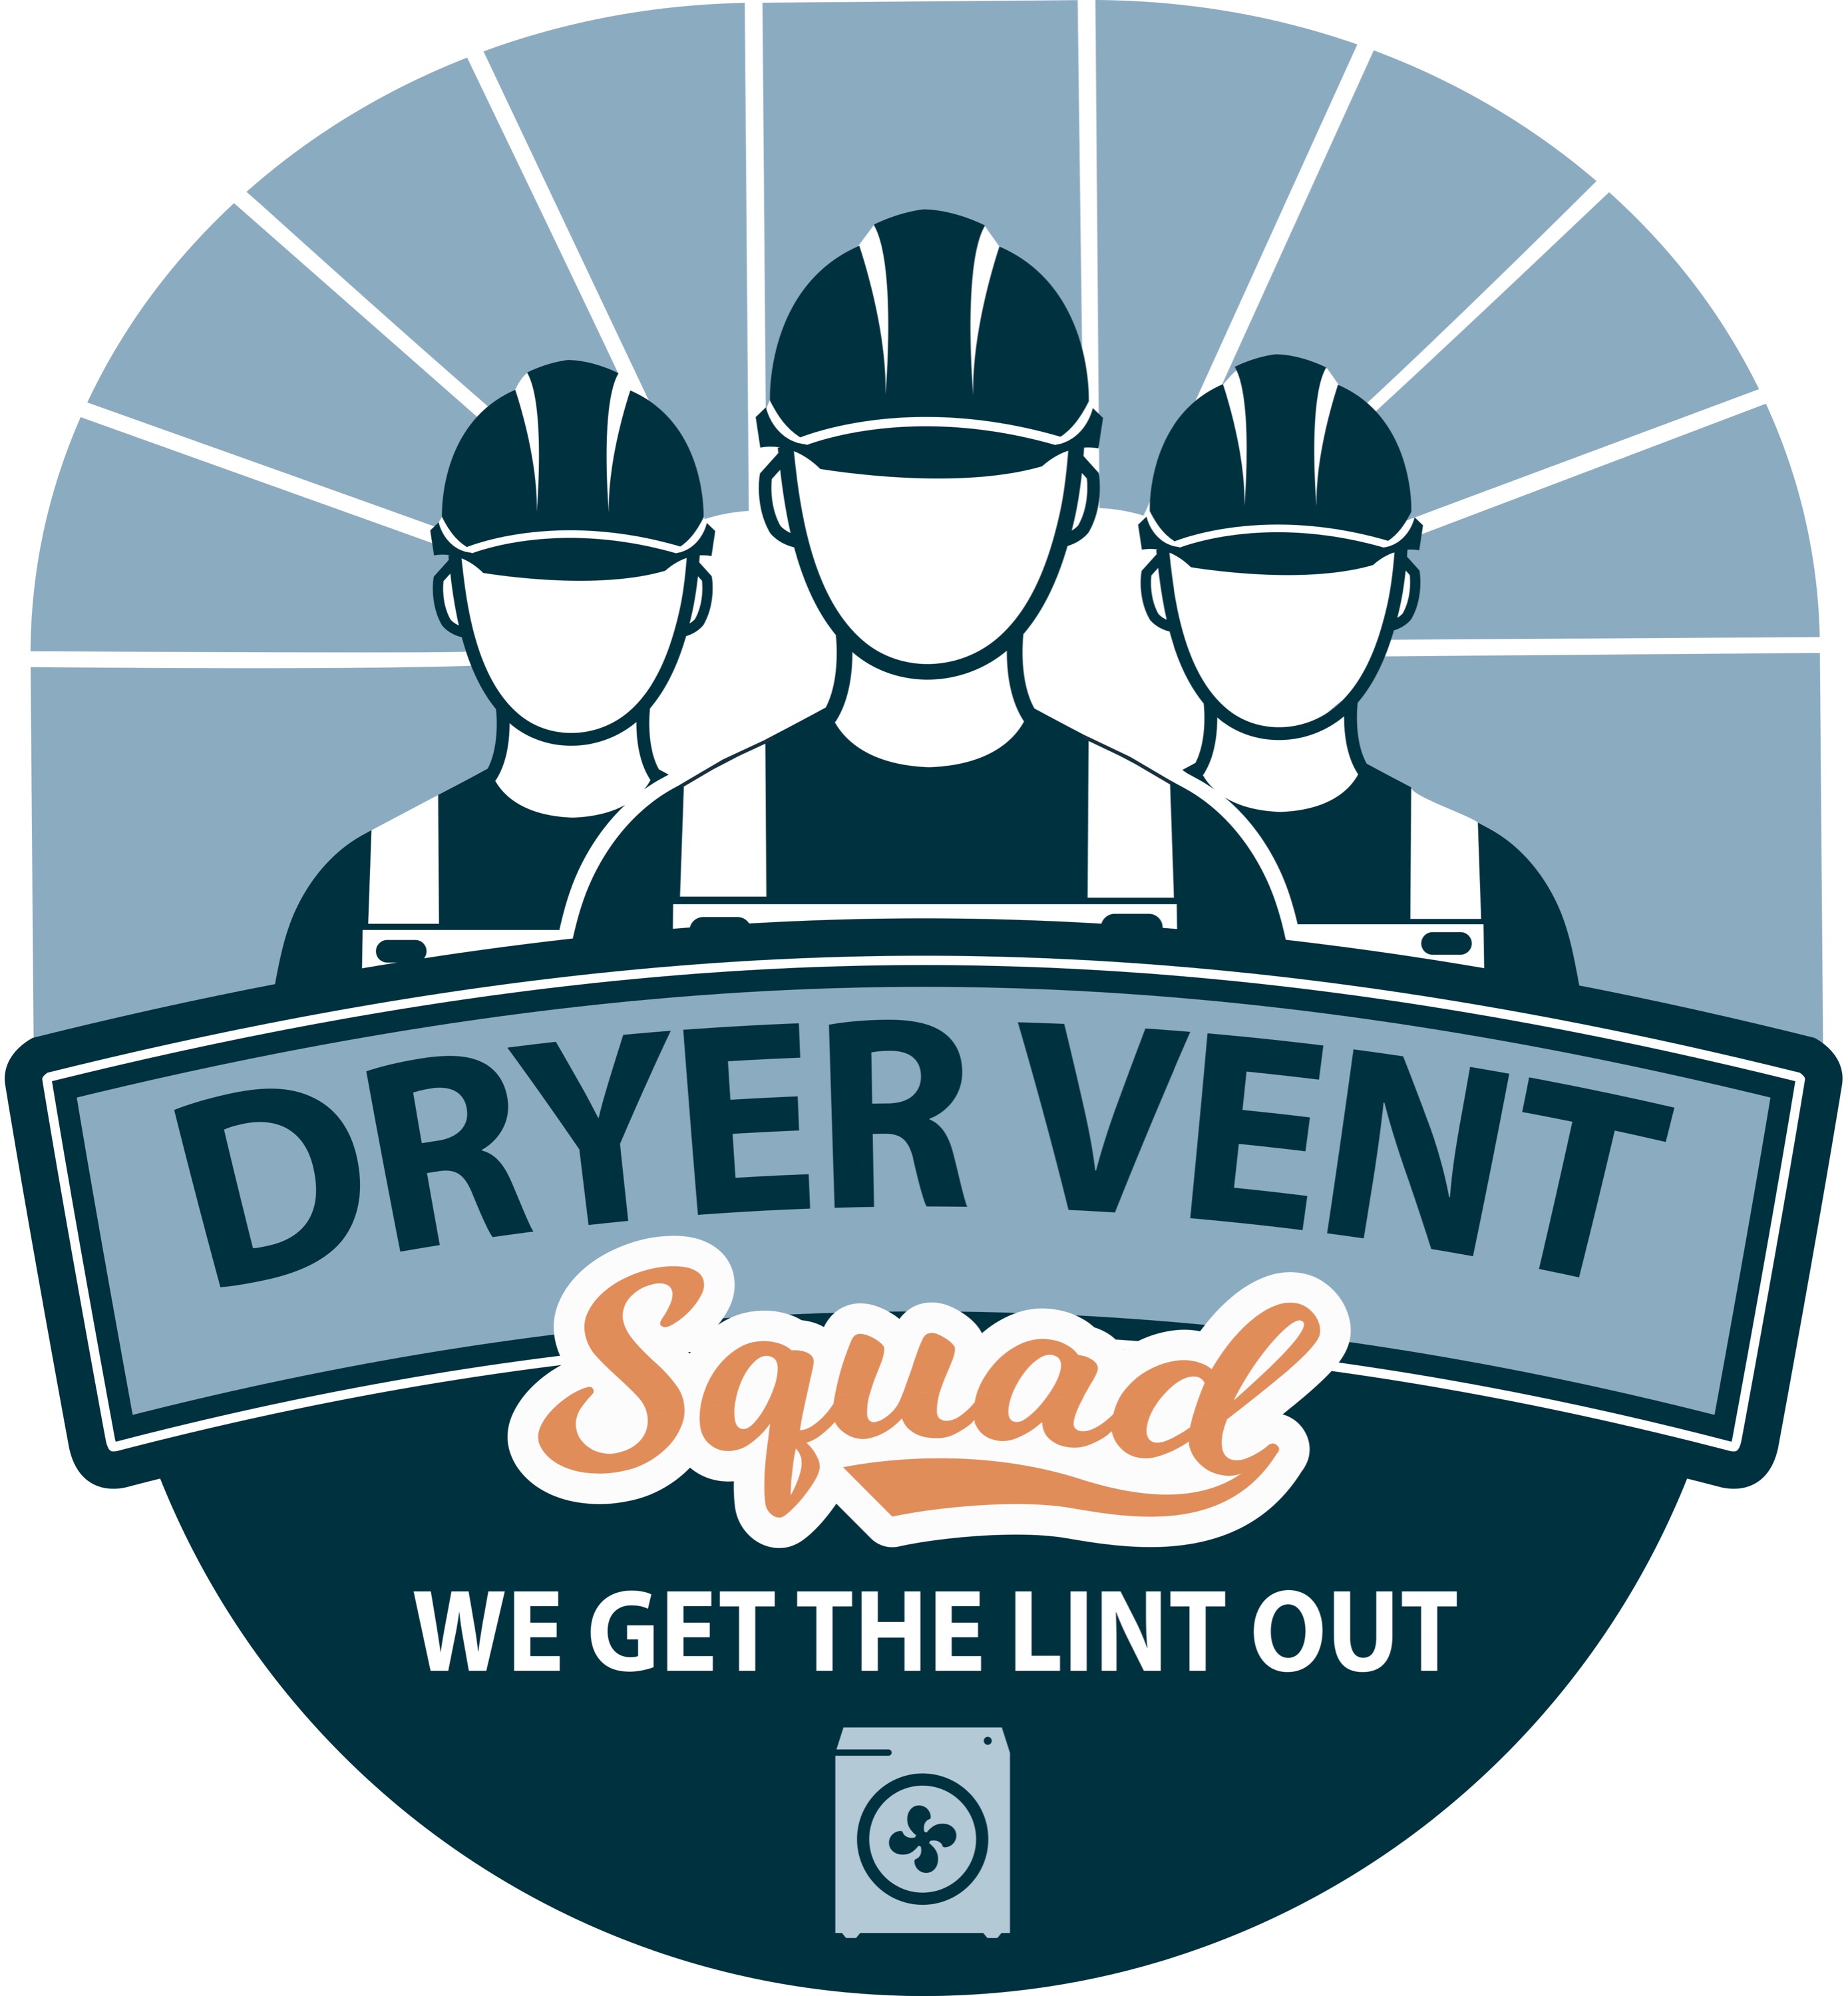 Dryer Vents Squad of Shrewsbury Logo